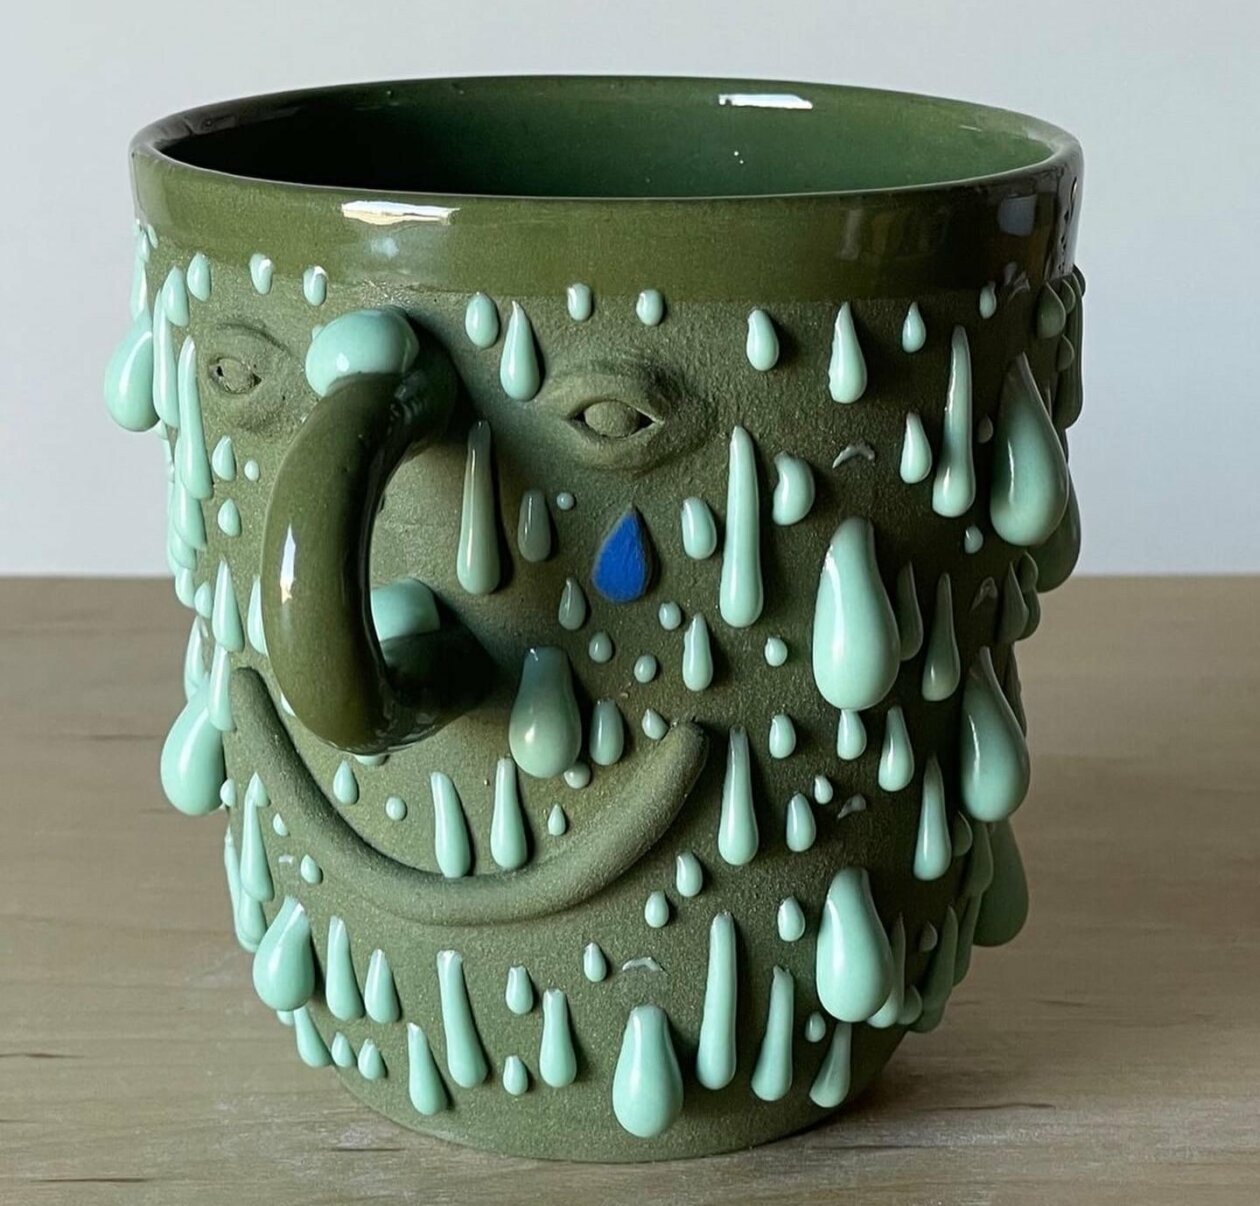 Playful Ceramic Vessels Of Strange Creatures And Melted Shapes By Philip Kupferschmidt 13